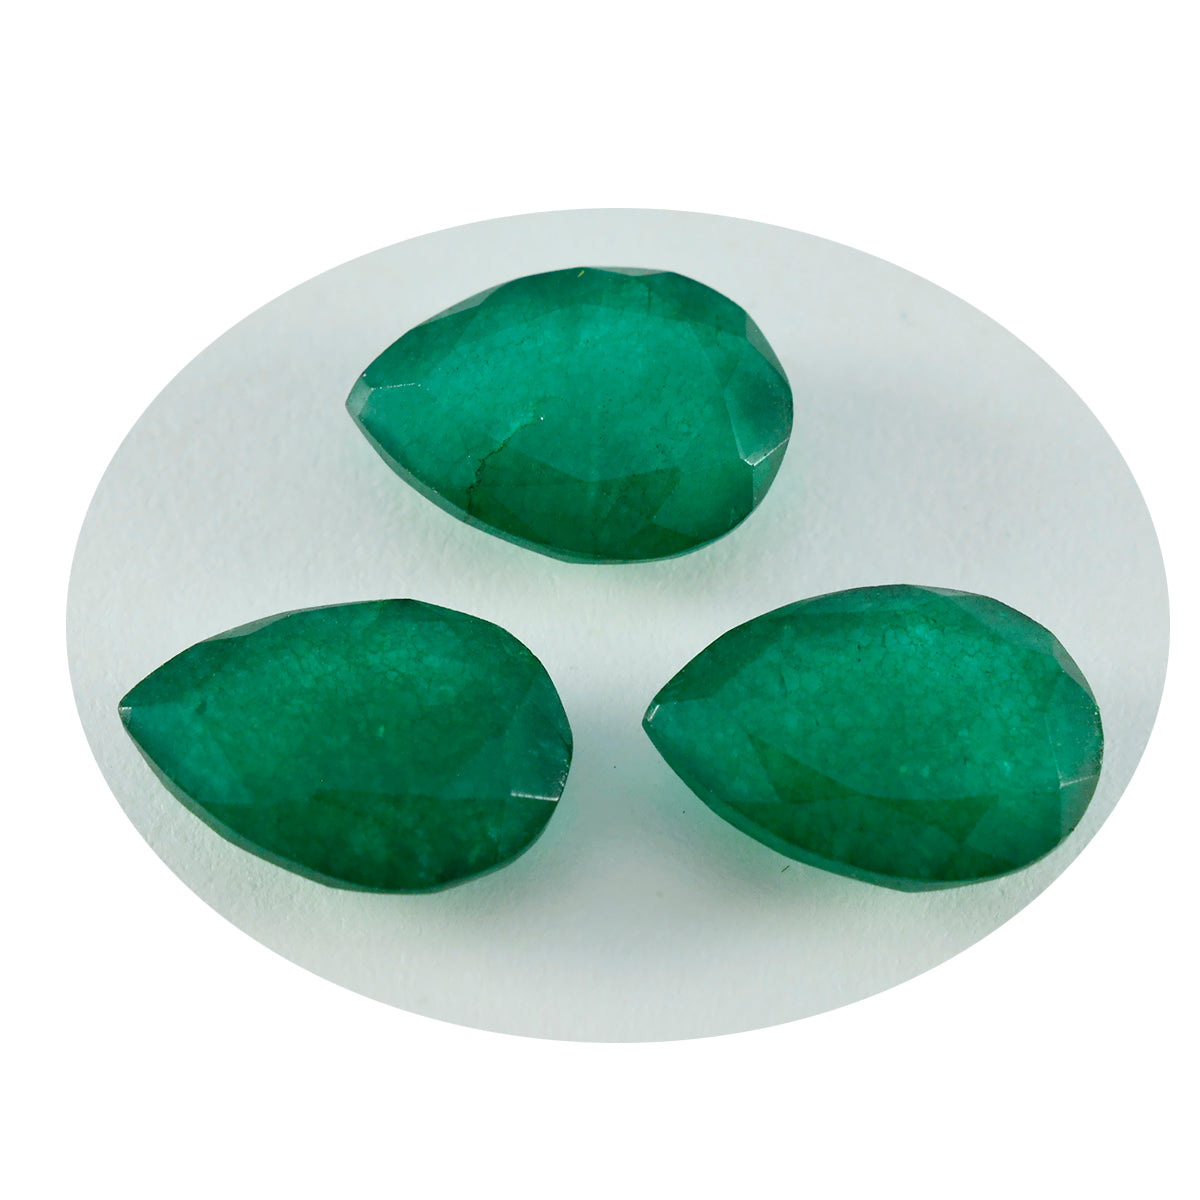 riyogems 1шт натуральная зеленая яшма граненая 8x12 мм грушевидная форма качество AAA рассыпной драгоценный камень